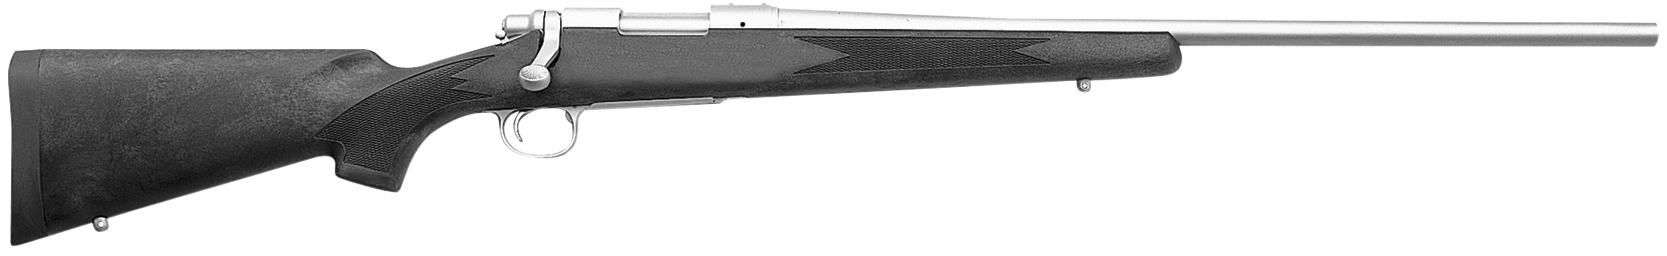 REMINGTON ARMS COMPANY, INC. MODEL 700 SERIES Models :: Gun Values by Gun  Digest